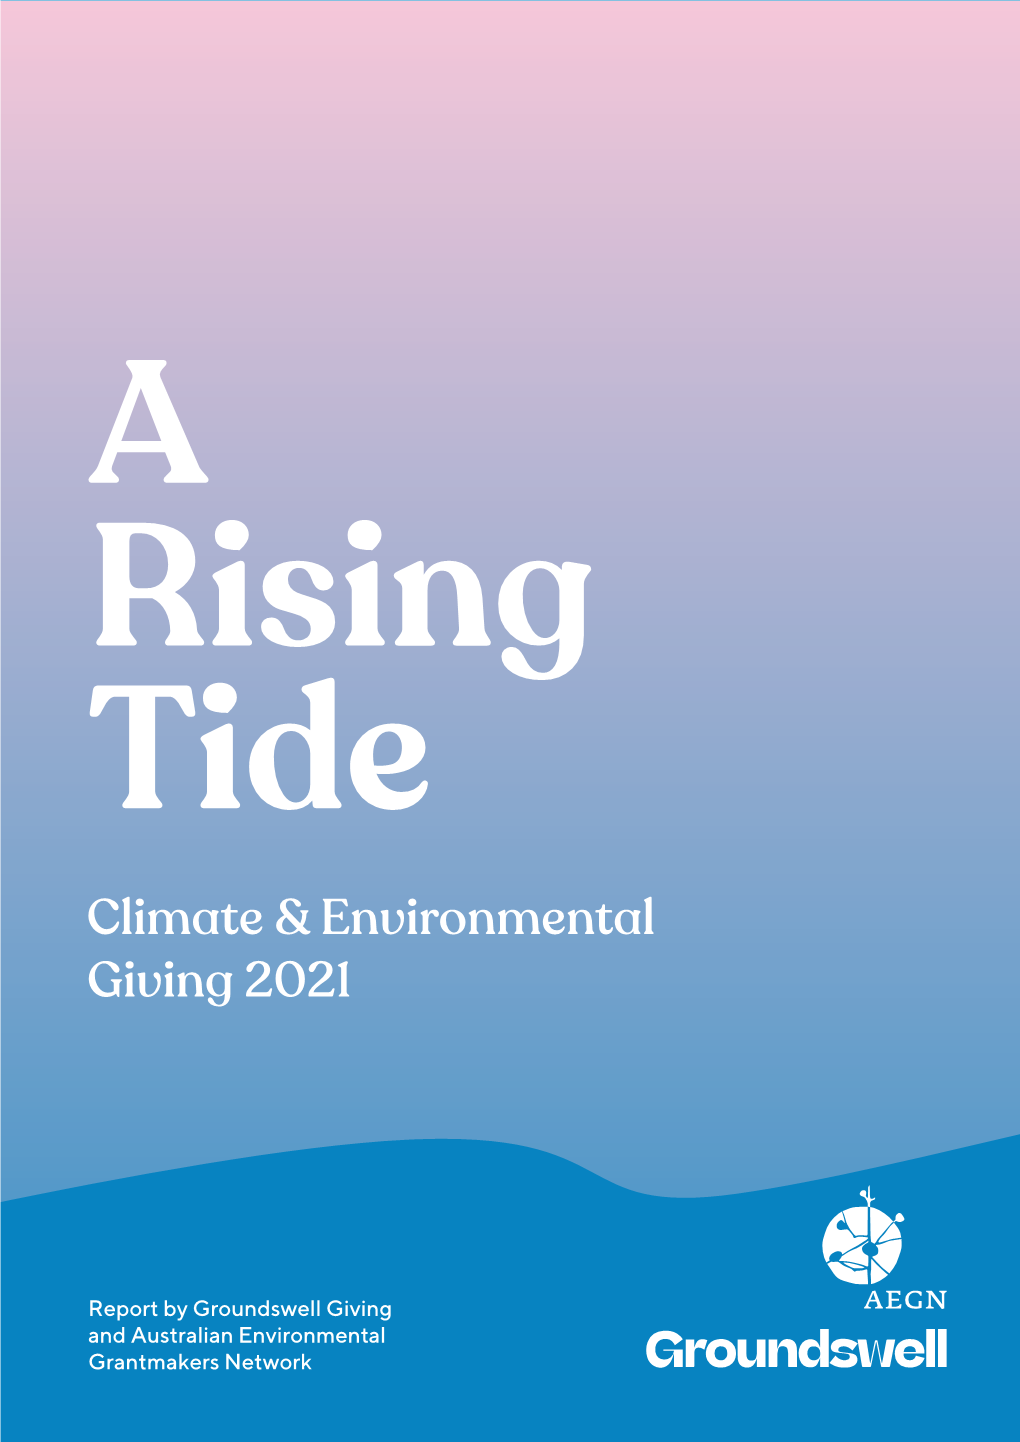 Climate & Environmental Giving 2021